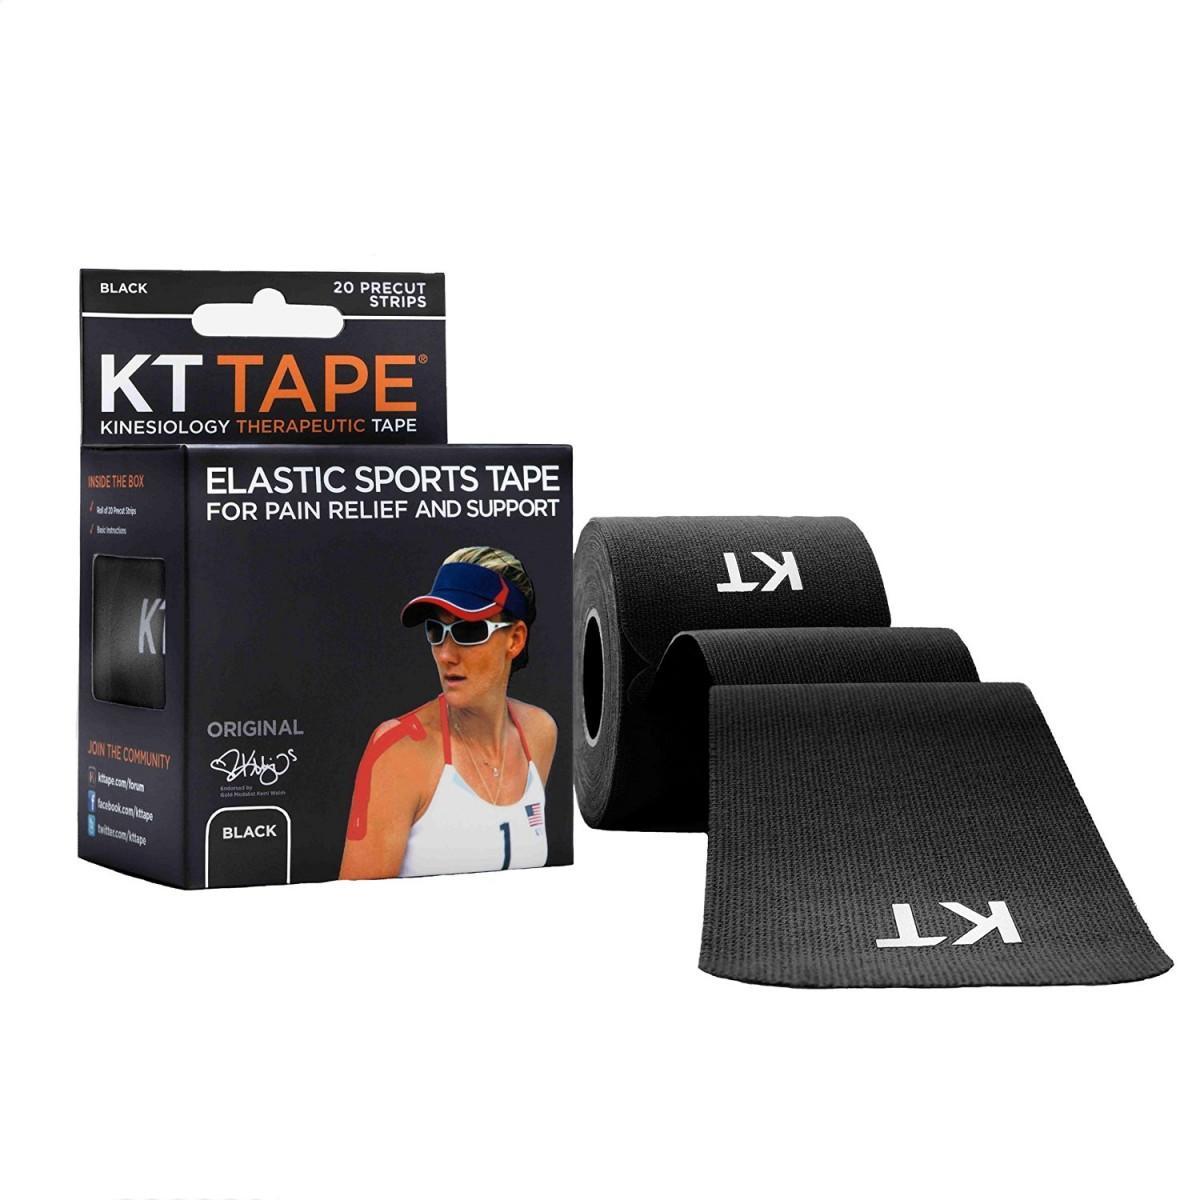 KT TAPE Original Cotton Elastic Kinesiology Therapeutic Tape Black 20 Pre-Cut 10-Inch Strips кинезио